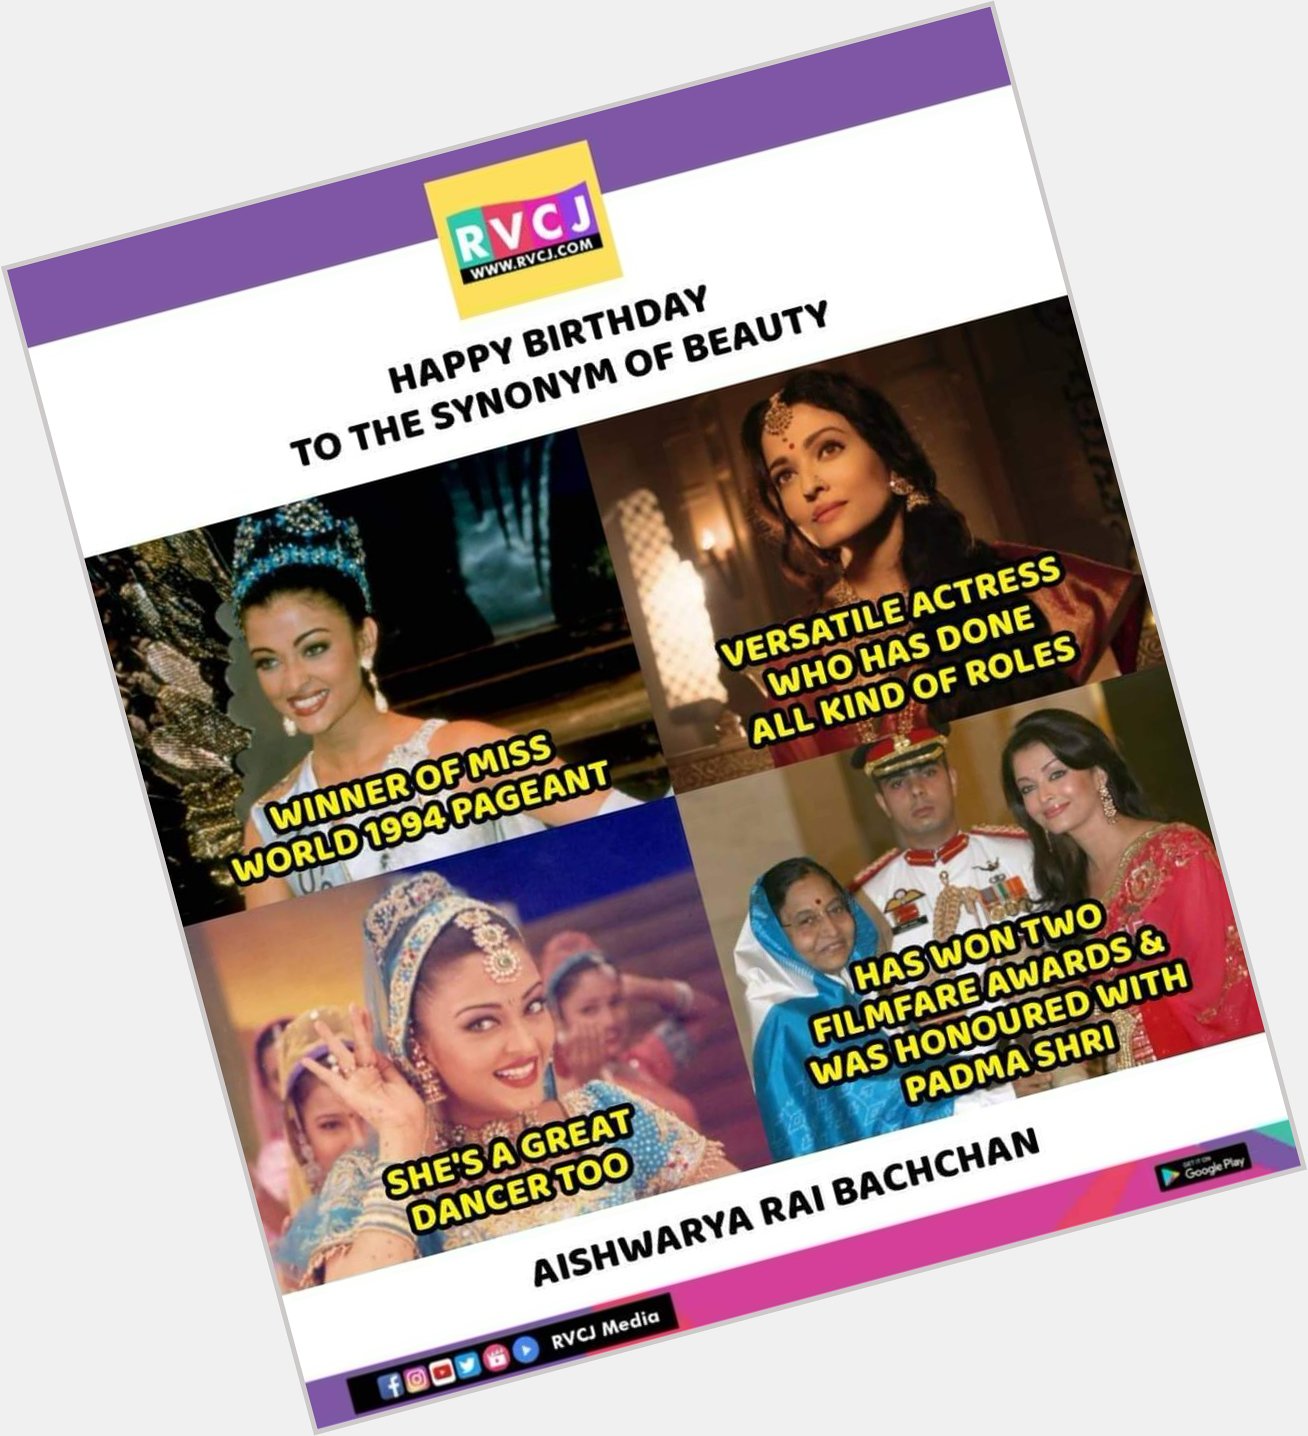 Happy Birthday Aishwarya Rai Bachchan!    